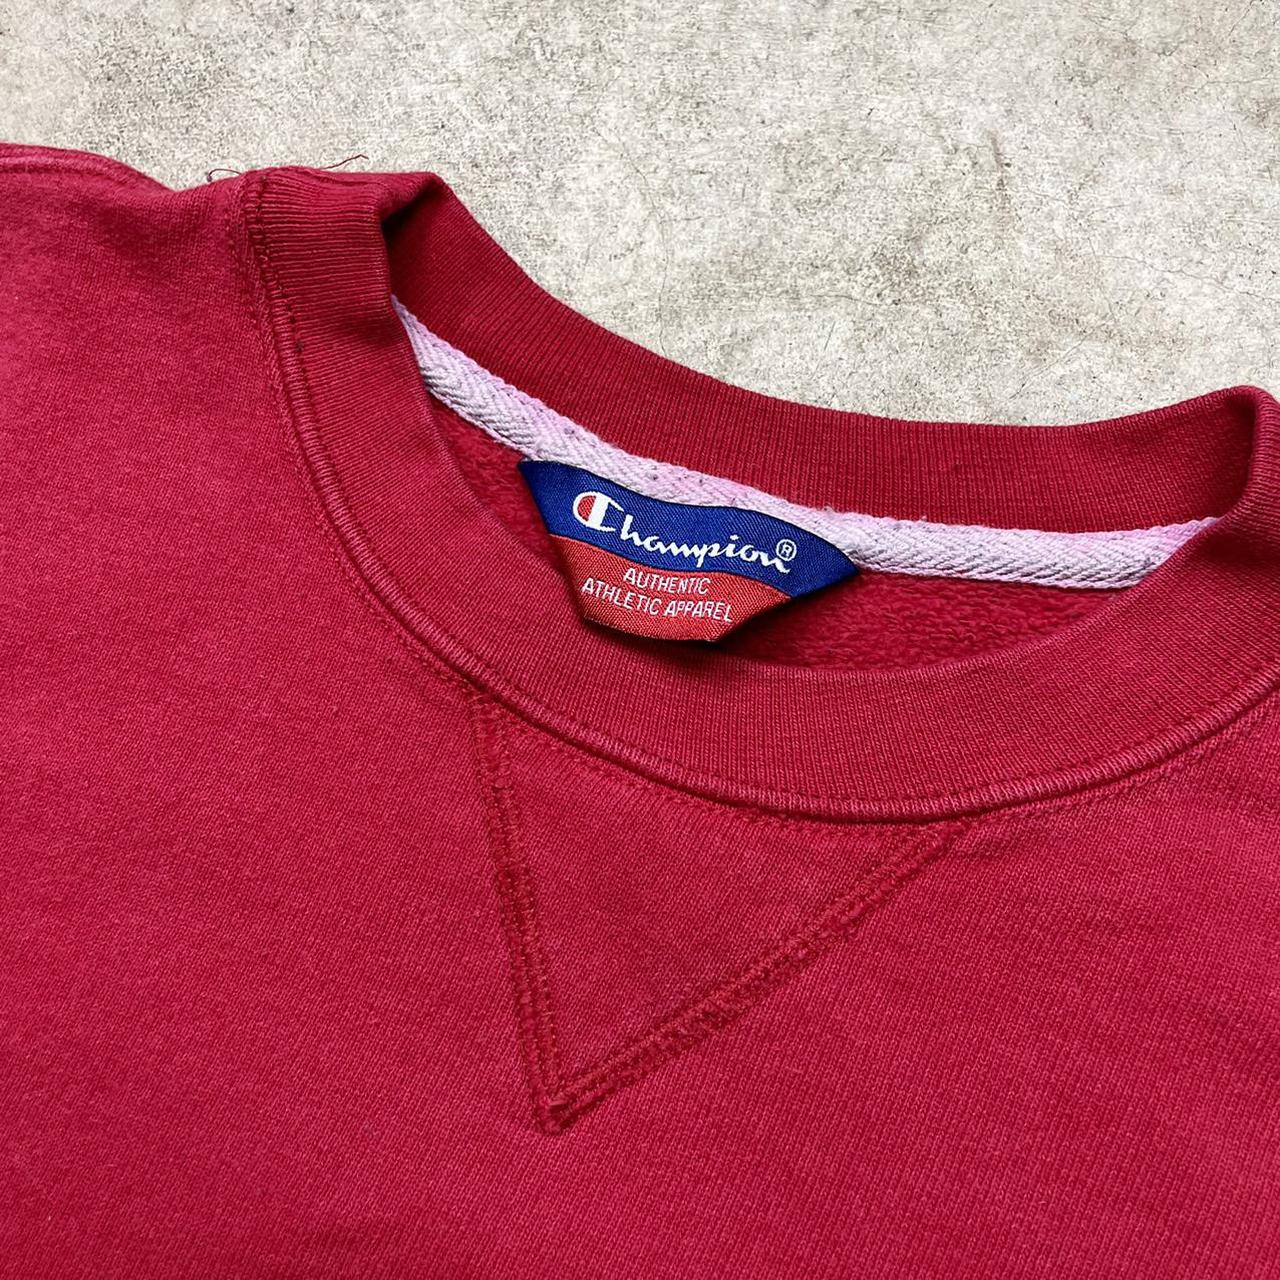 Product Image 3 - Vintage 90s Champion Crewneck Sweatshirt
Size